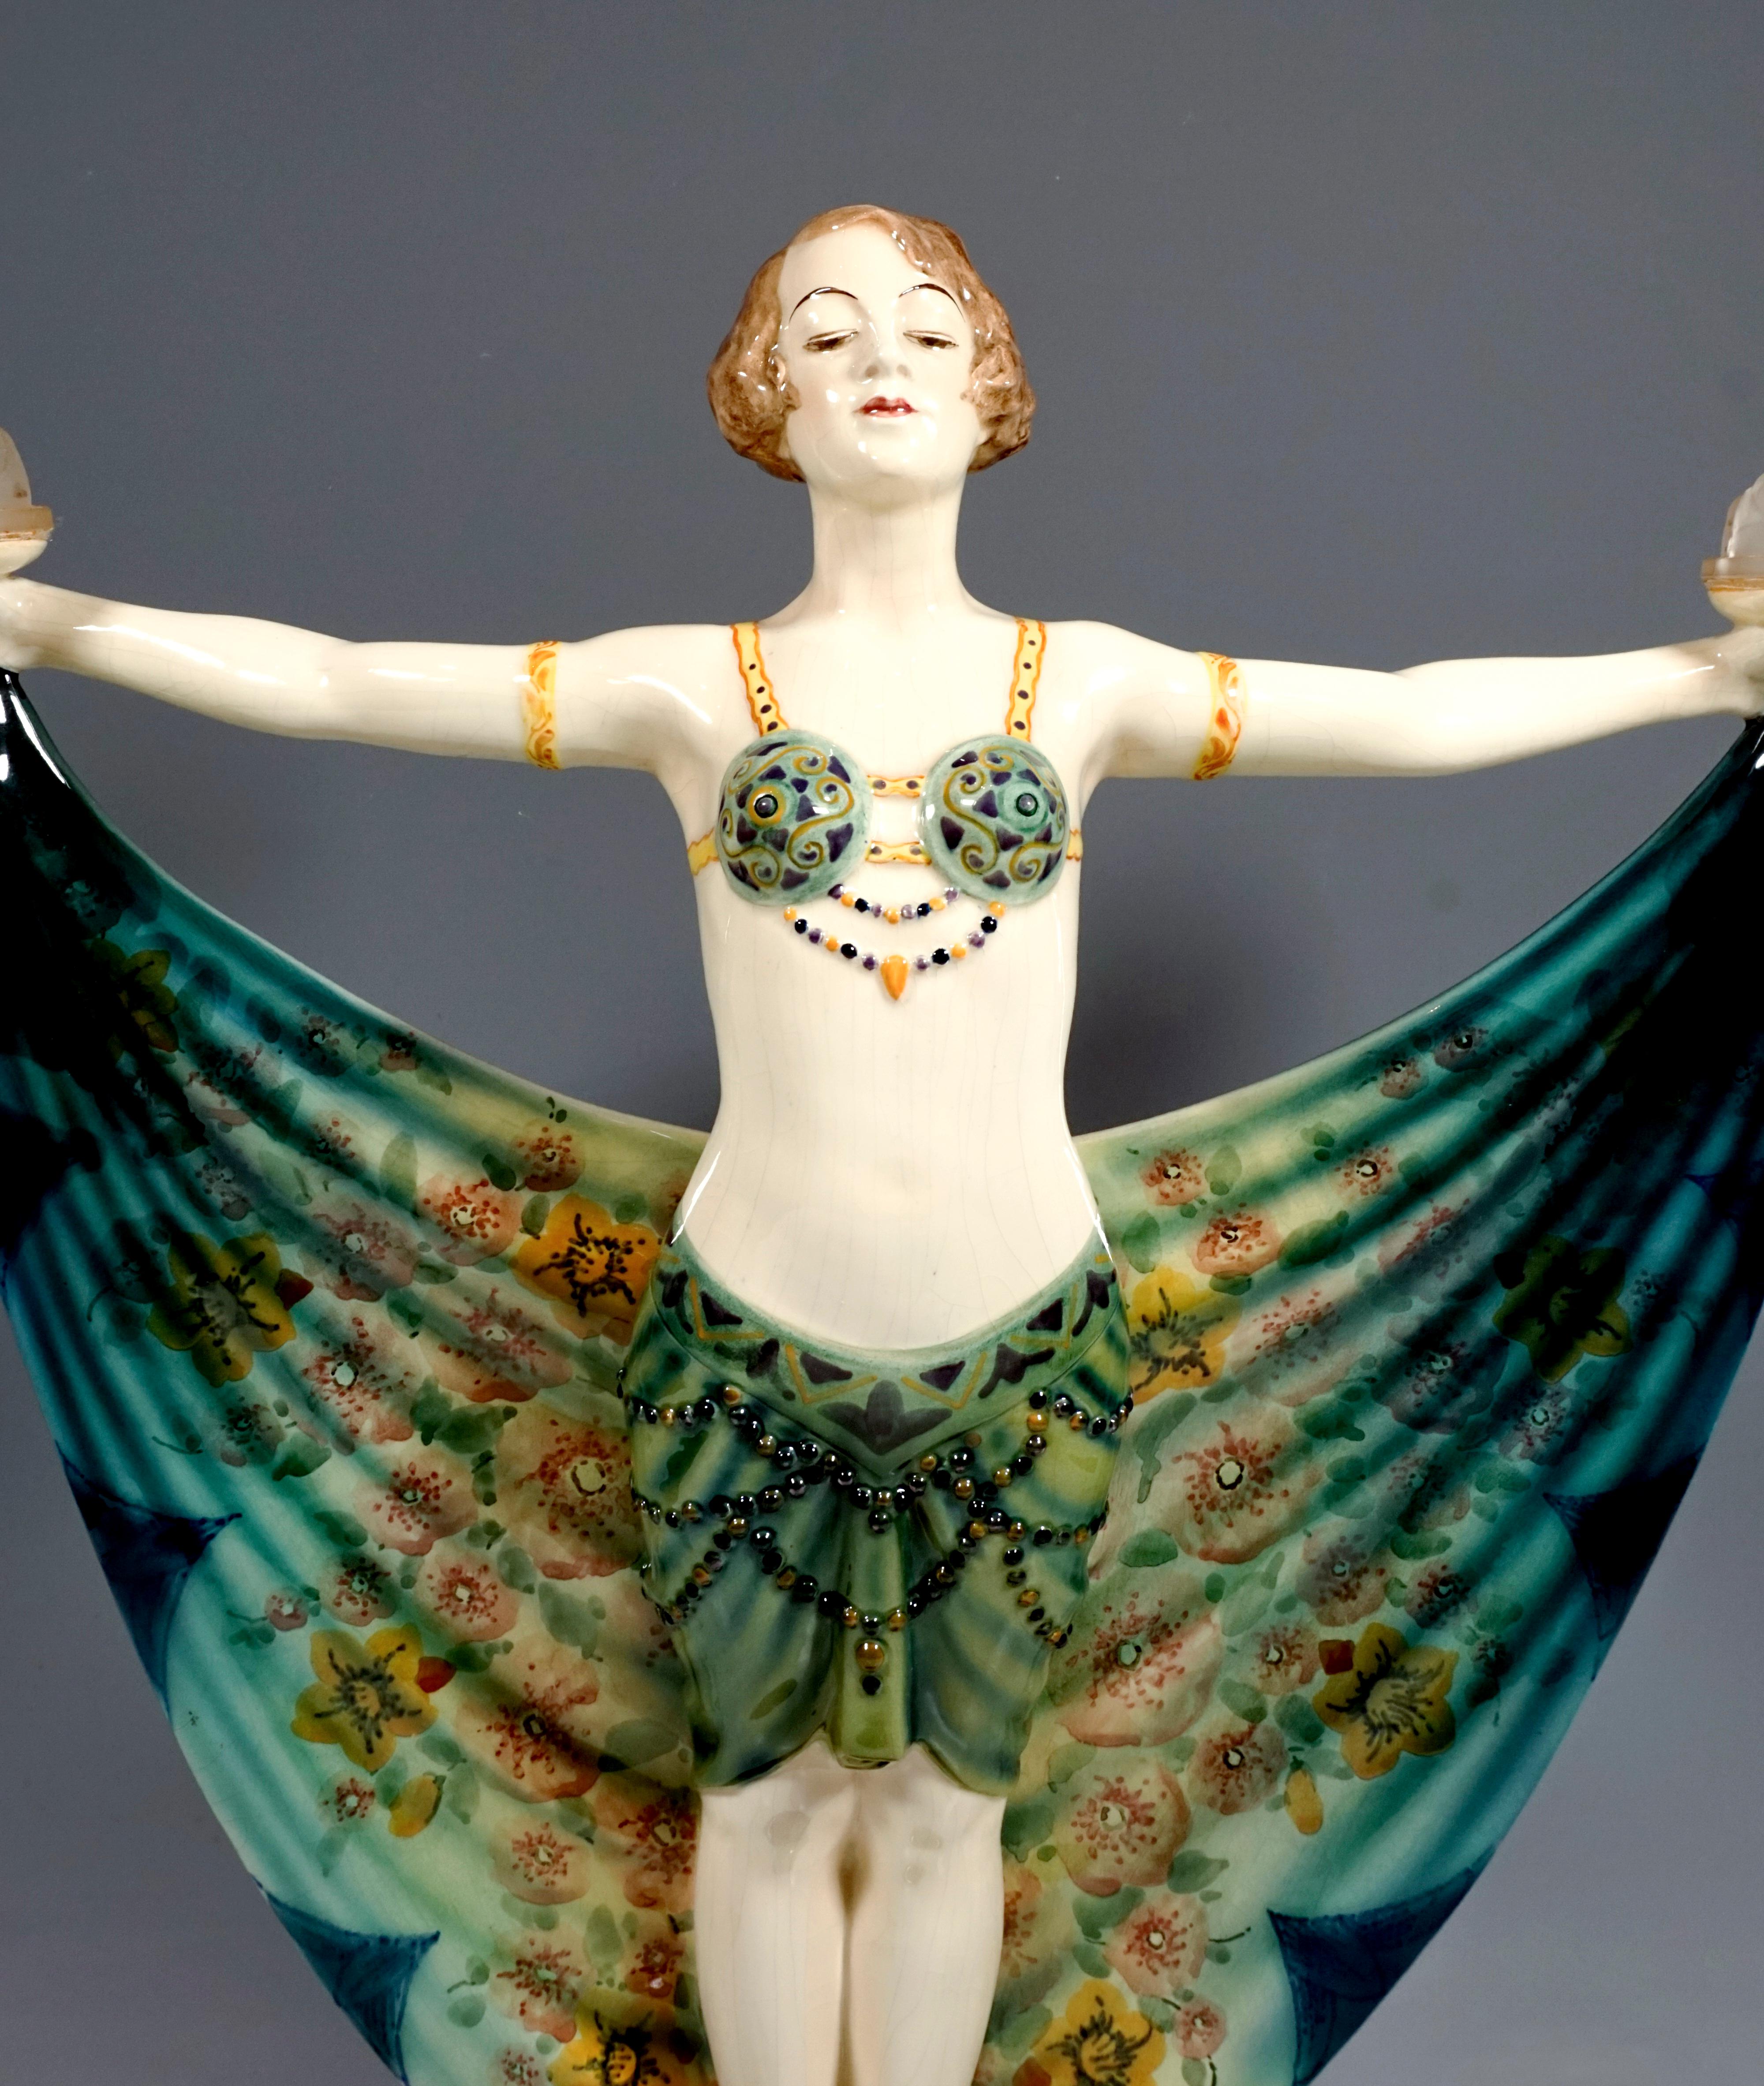 Early 20th Century Goldscheider Vienna Art Deco Figure with Lighting 'Harem Dance' by Lorenzl, 1925